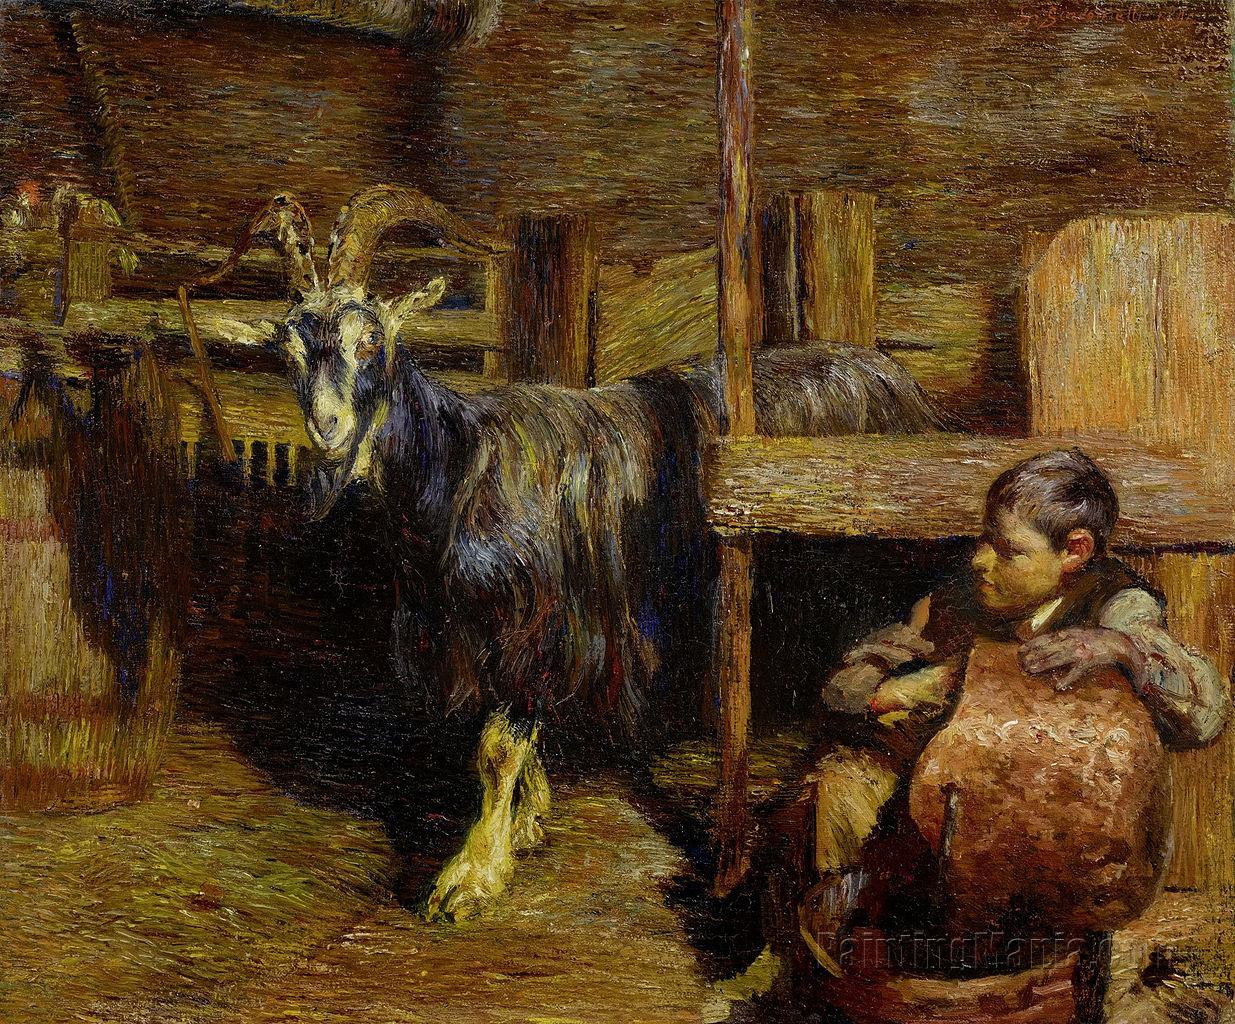 In the Goat Barn